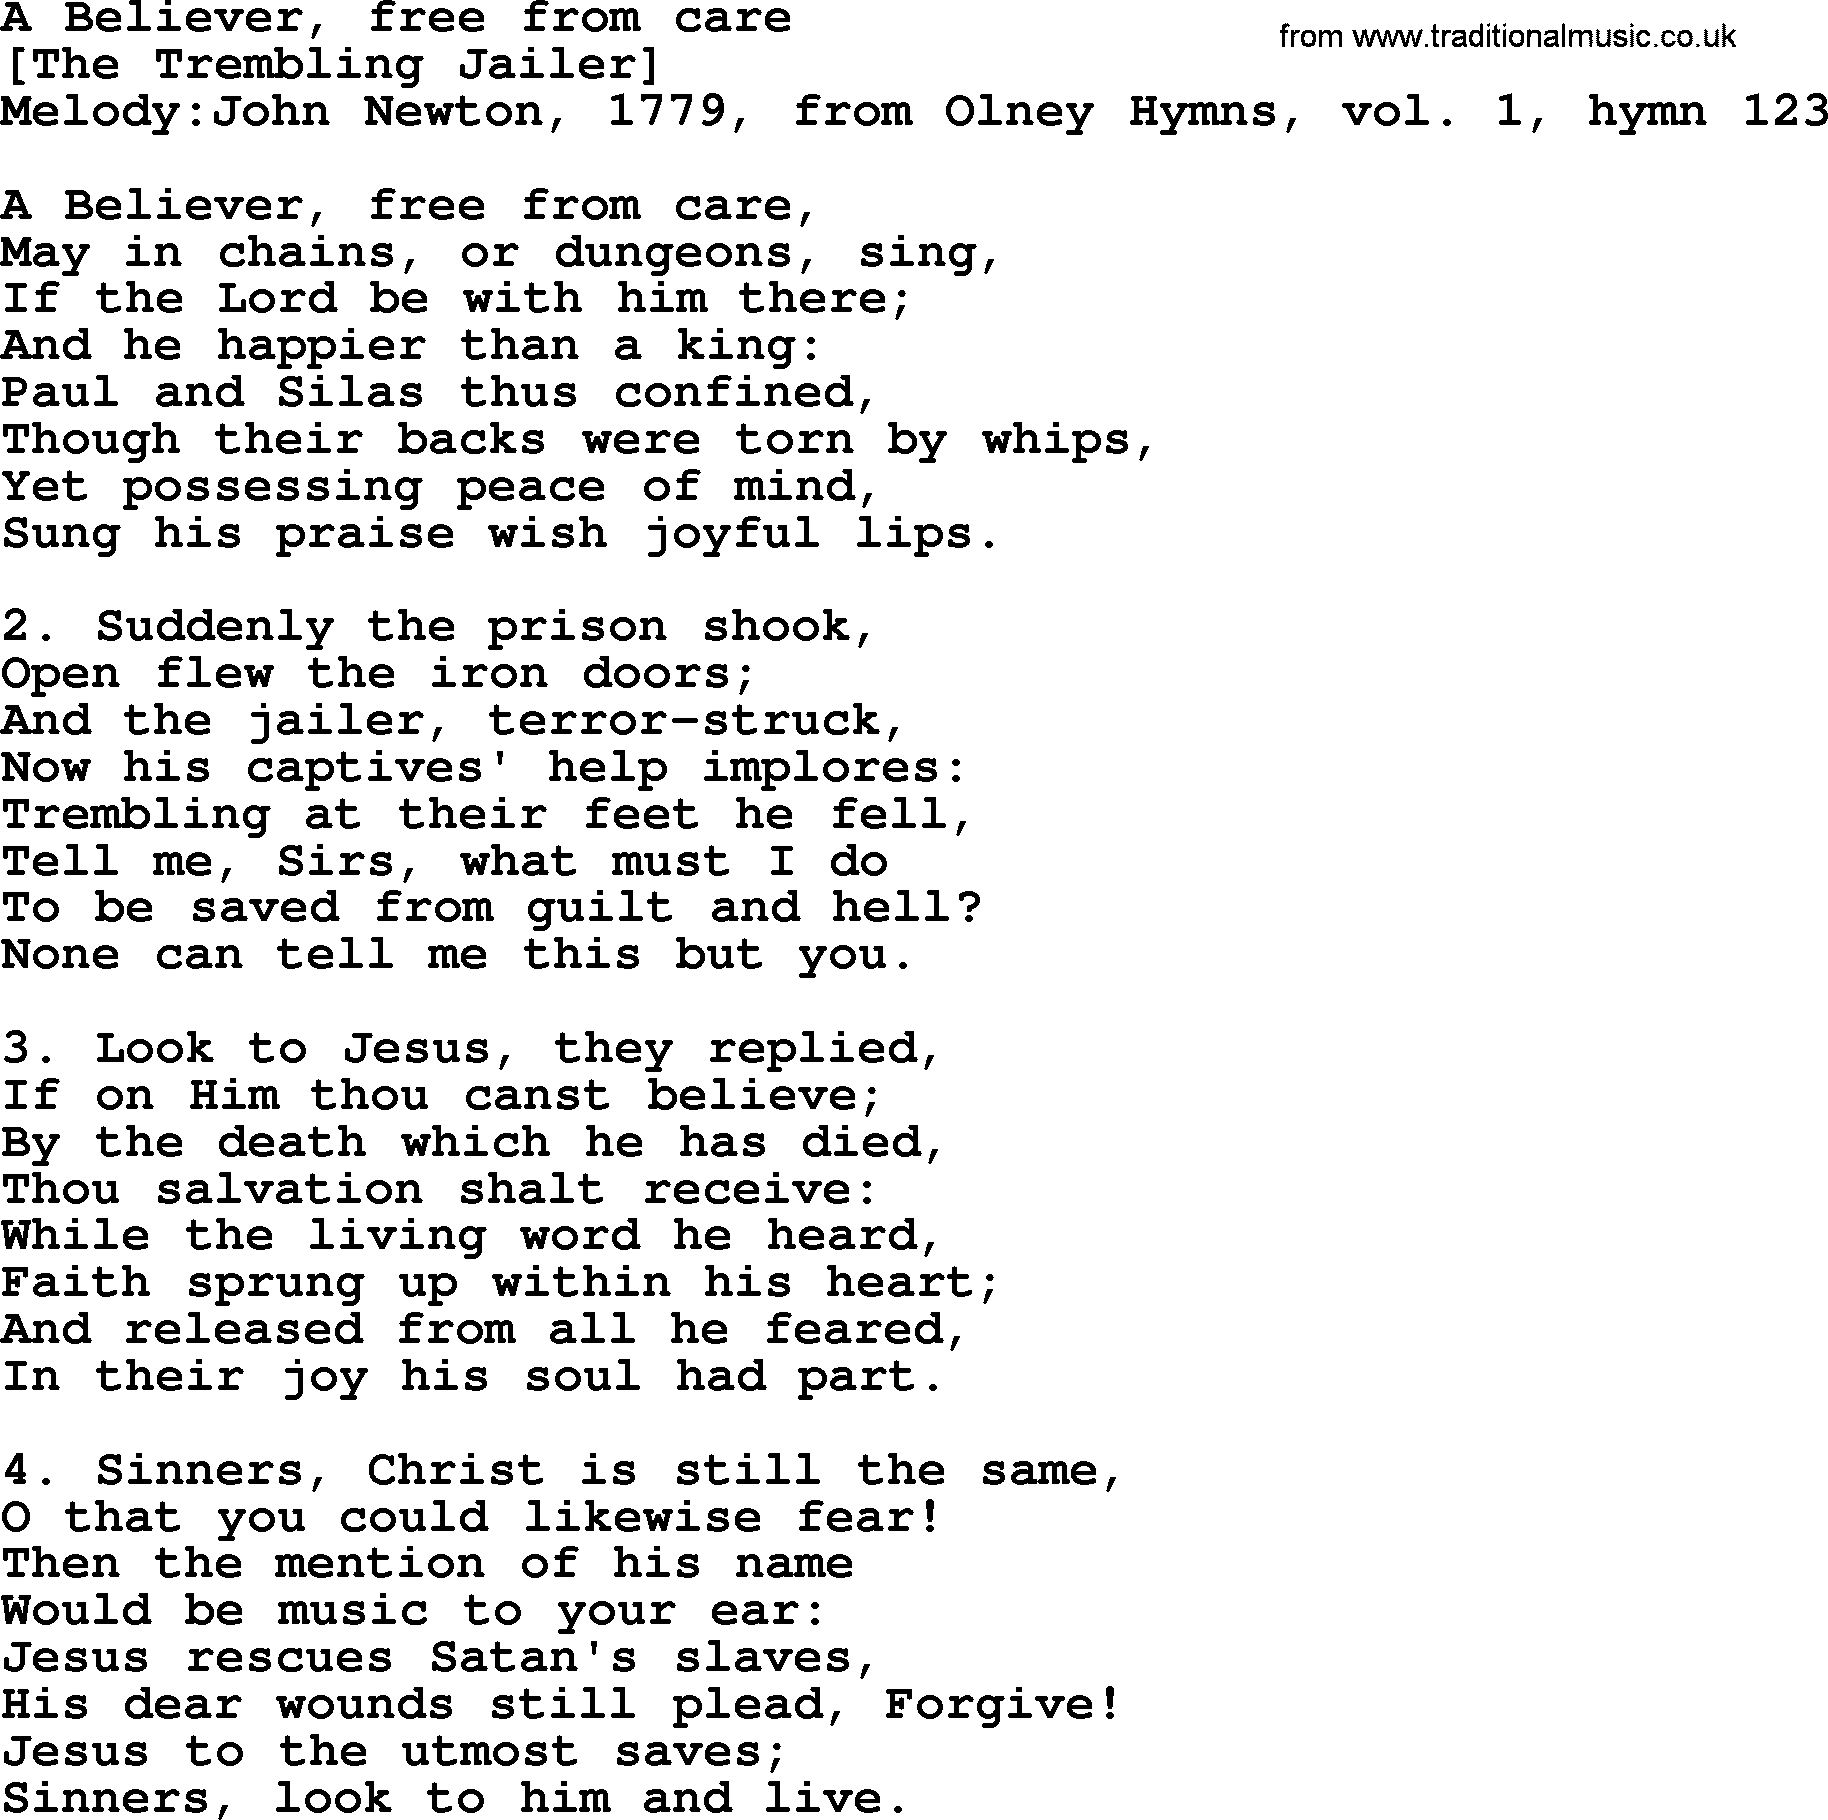 Believer song lyrics